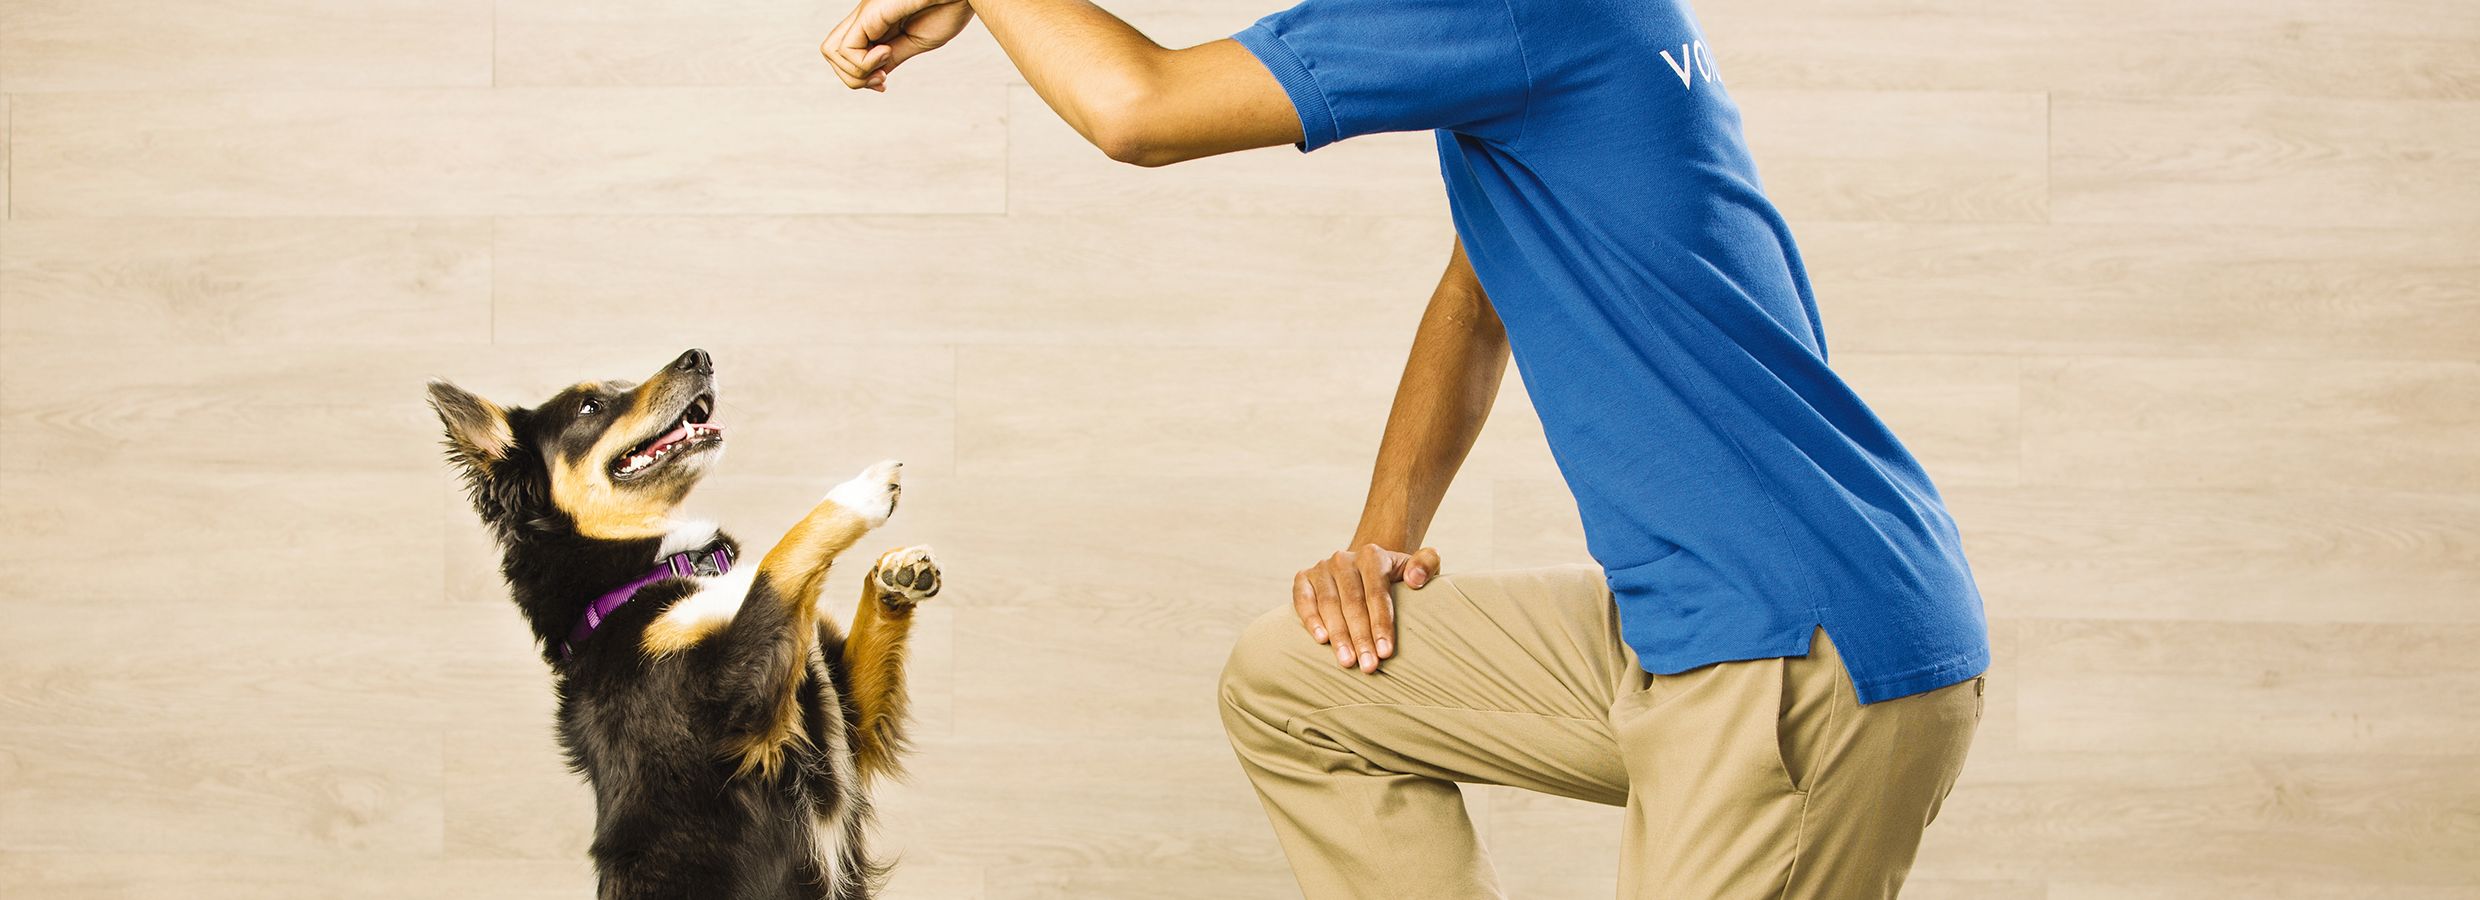 dog grooming classes at petsmart